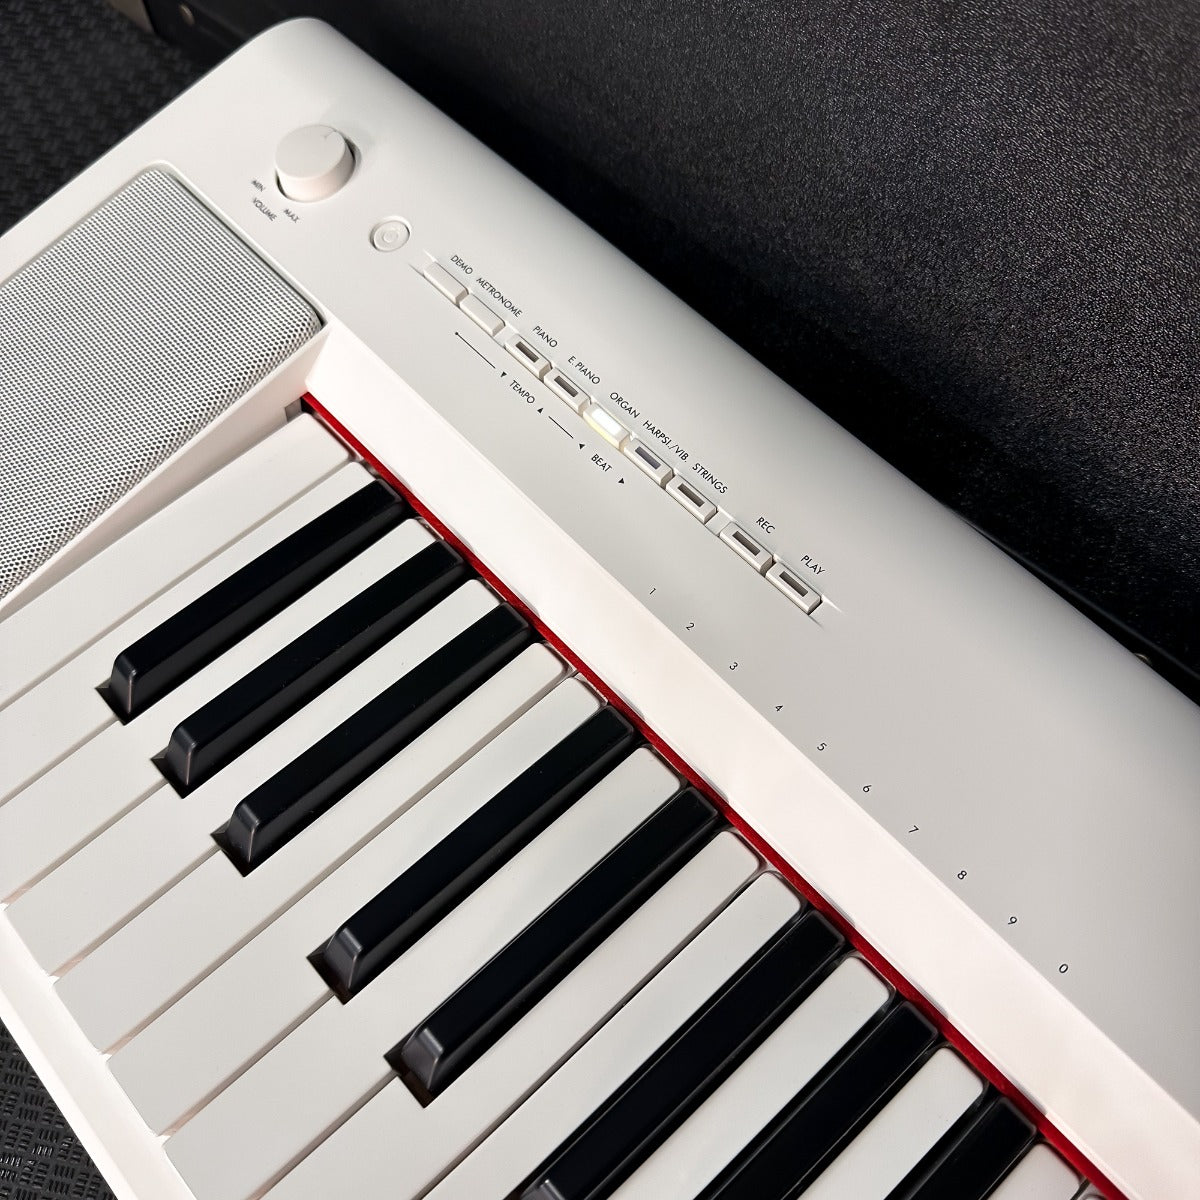 Yamaha Piaggero NP35 76-Key Portable Keyboard with Power Adapter - White, View 7